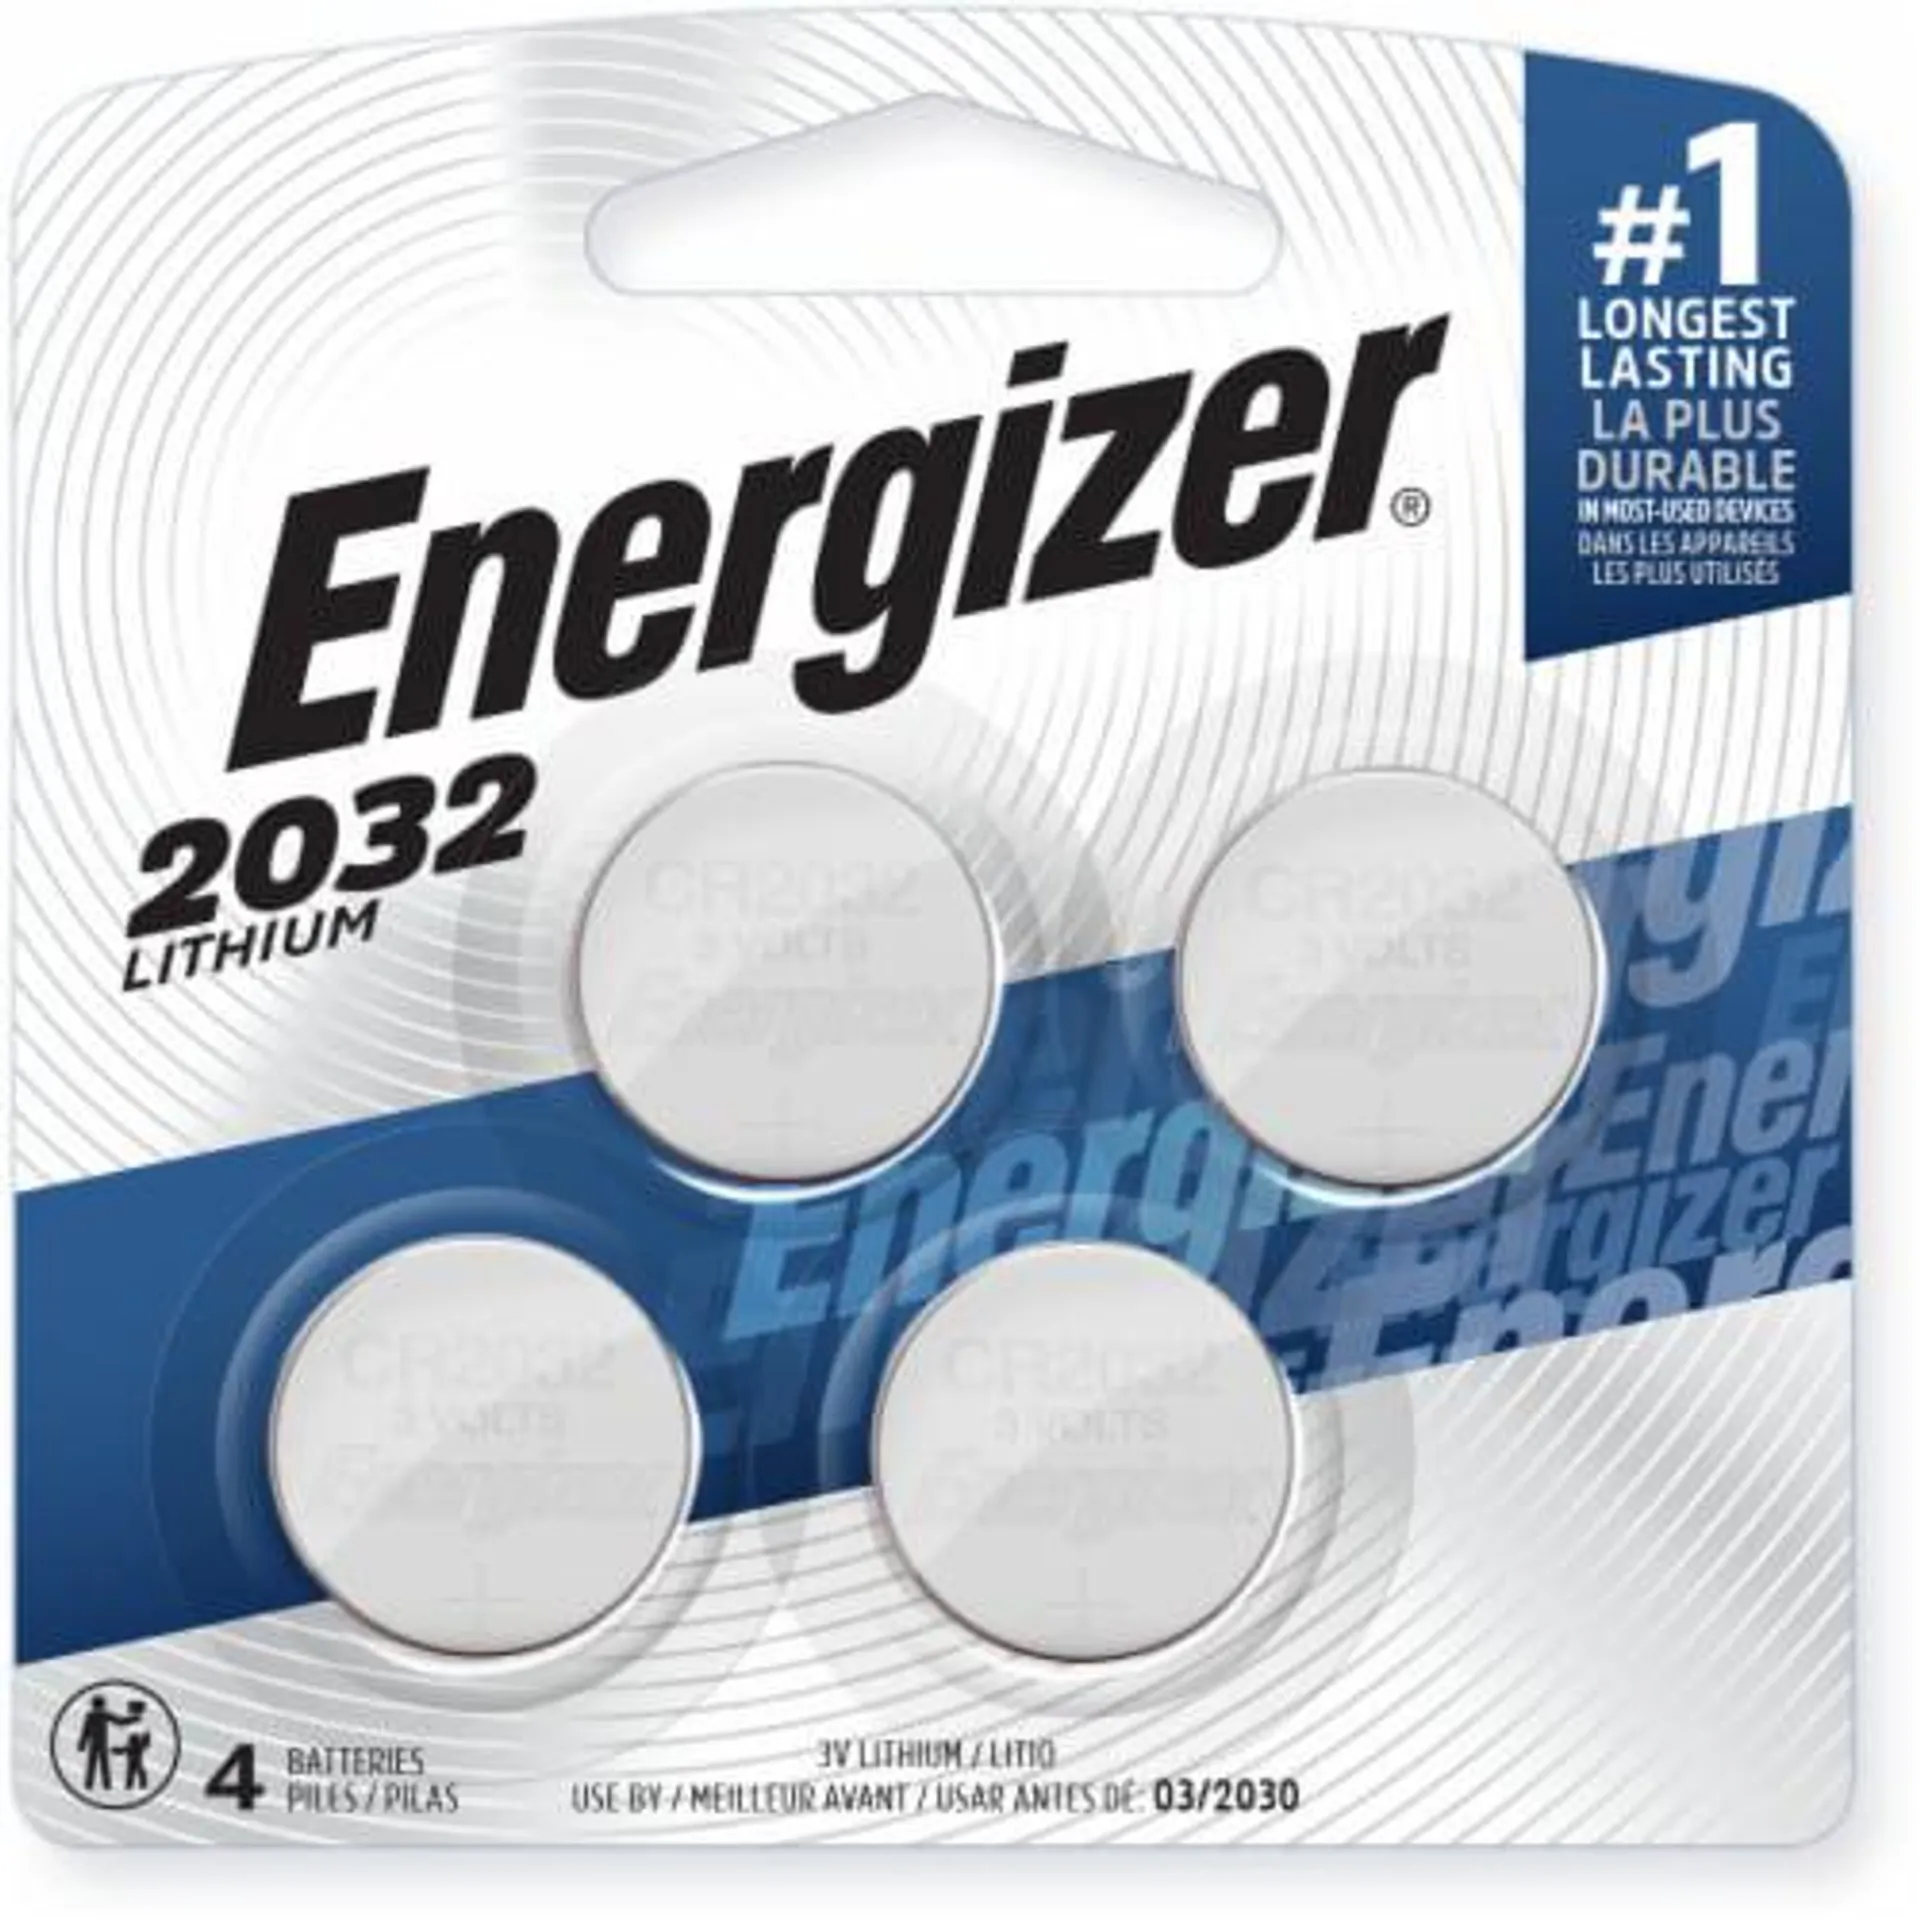 Energizer 2032 Batteries (4 Pack) 3V Lithium Coin Batteries